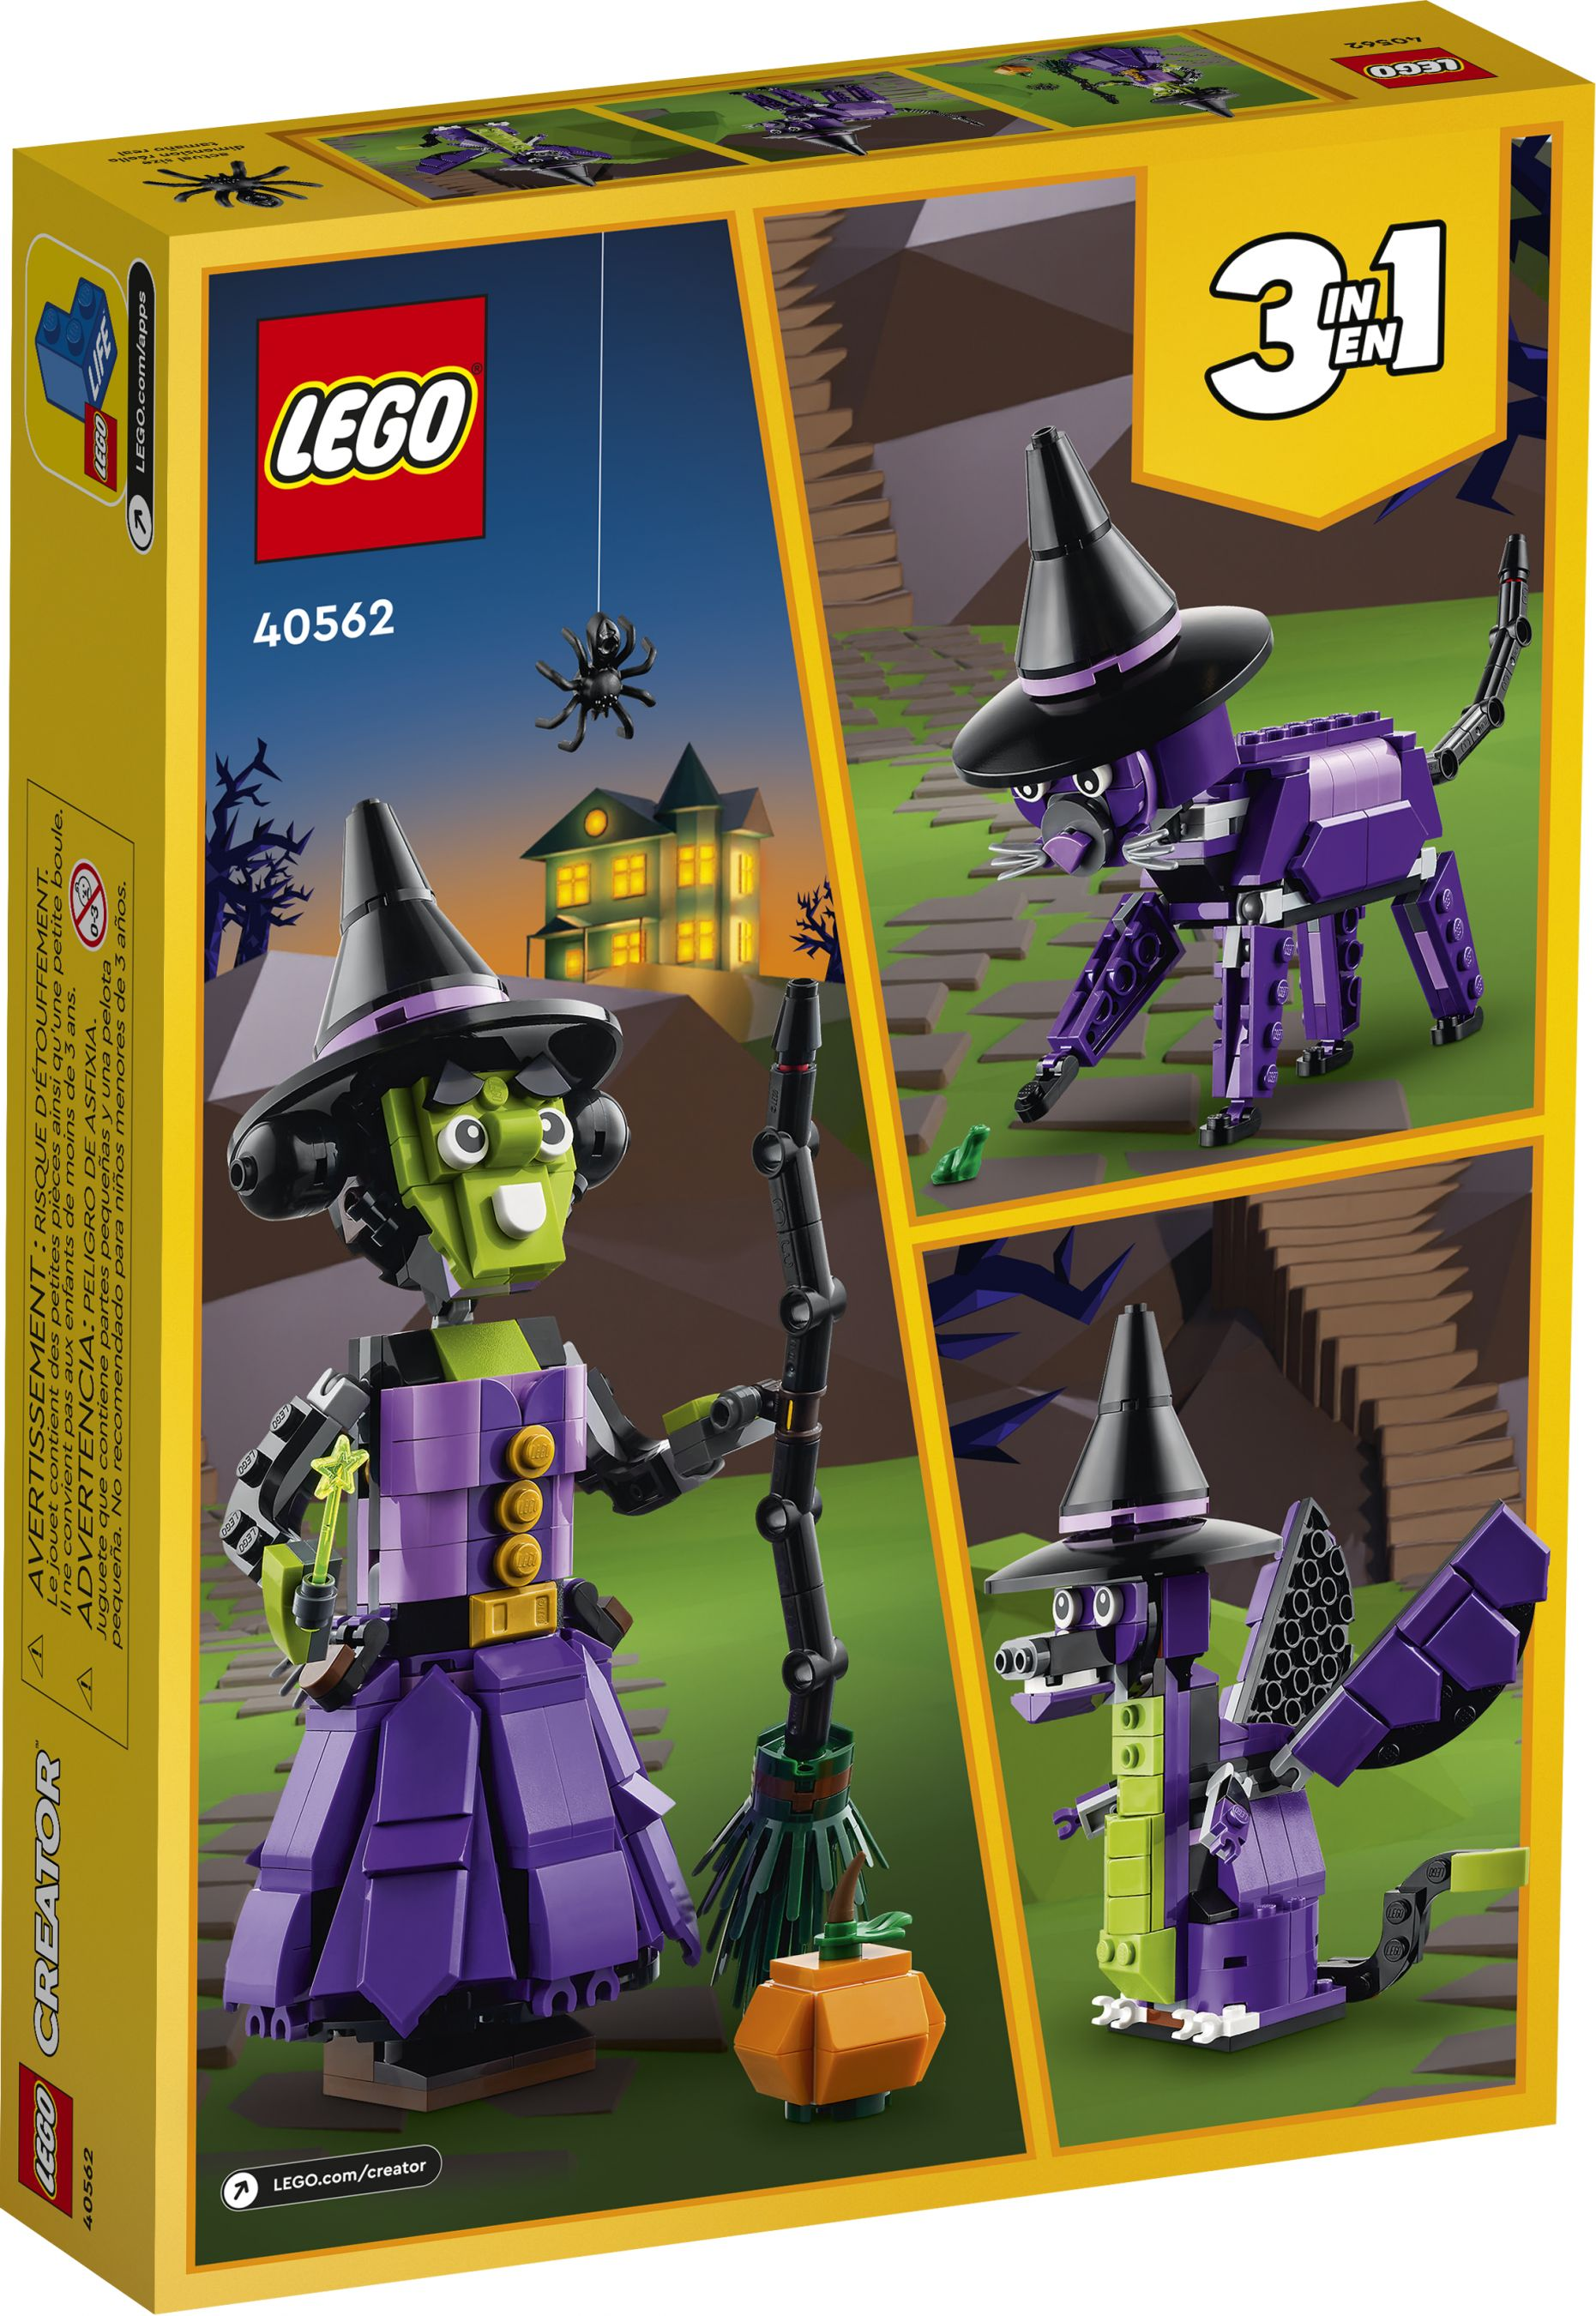 LEGO 40562 Geheimnisvolle Hexe Bausatz